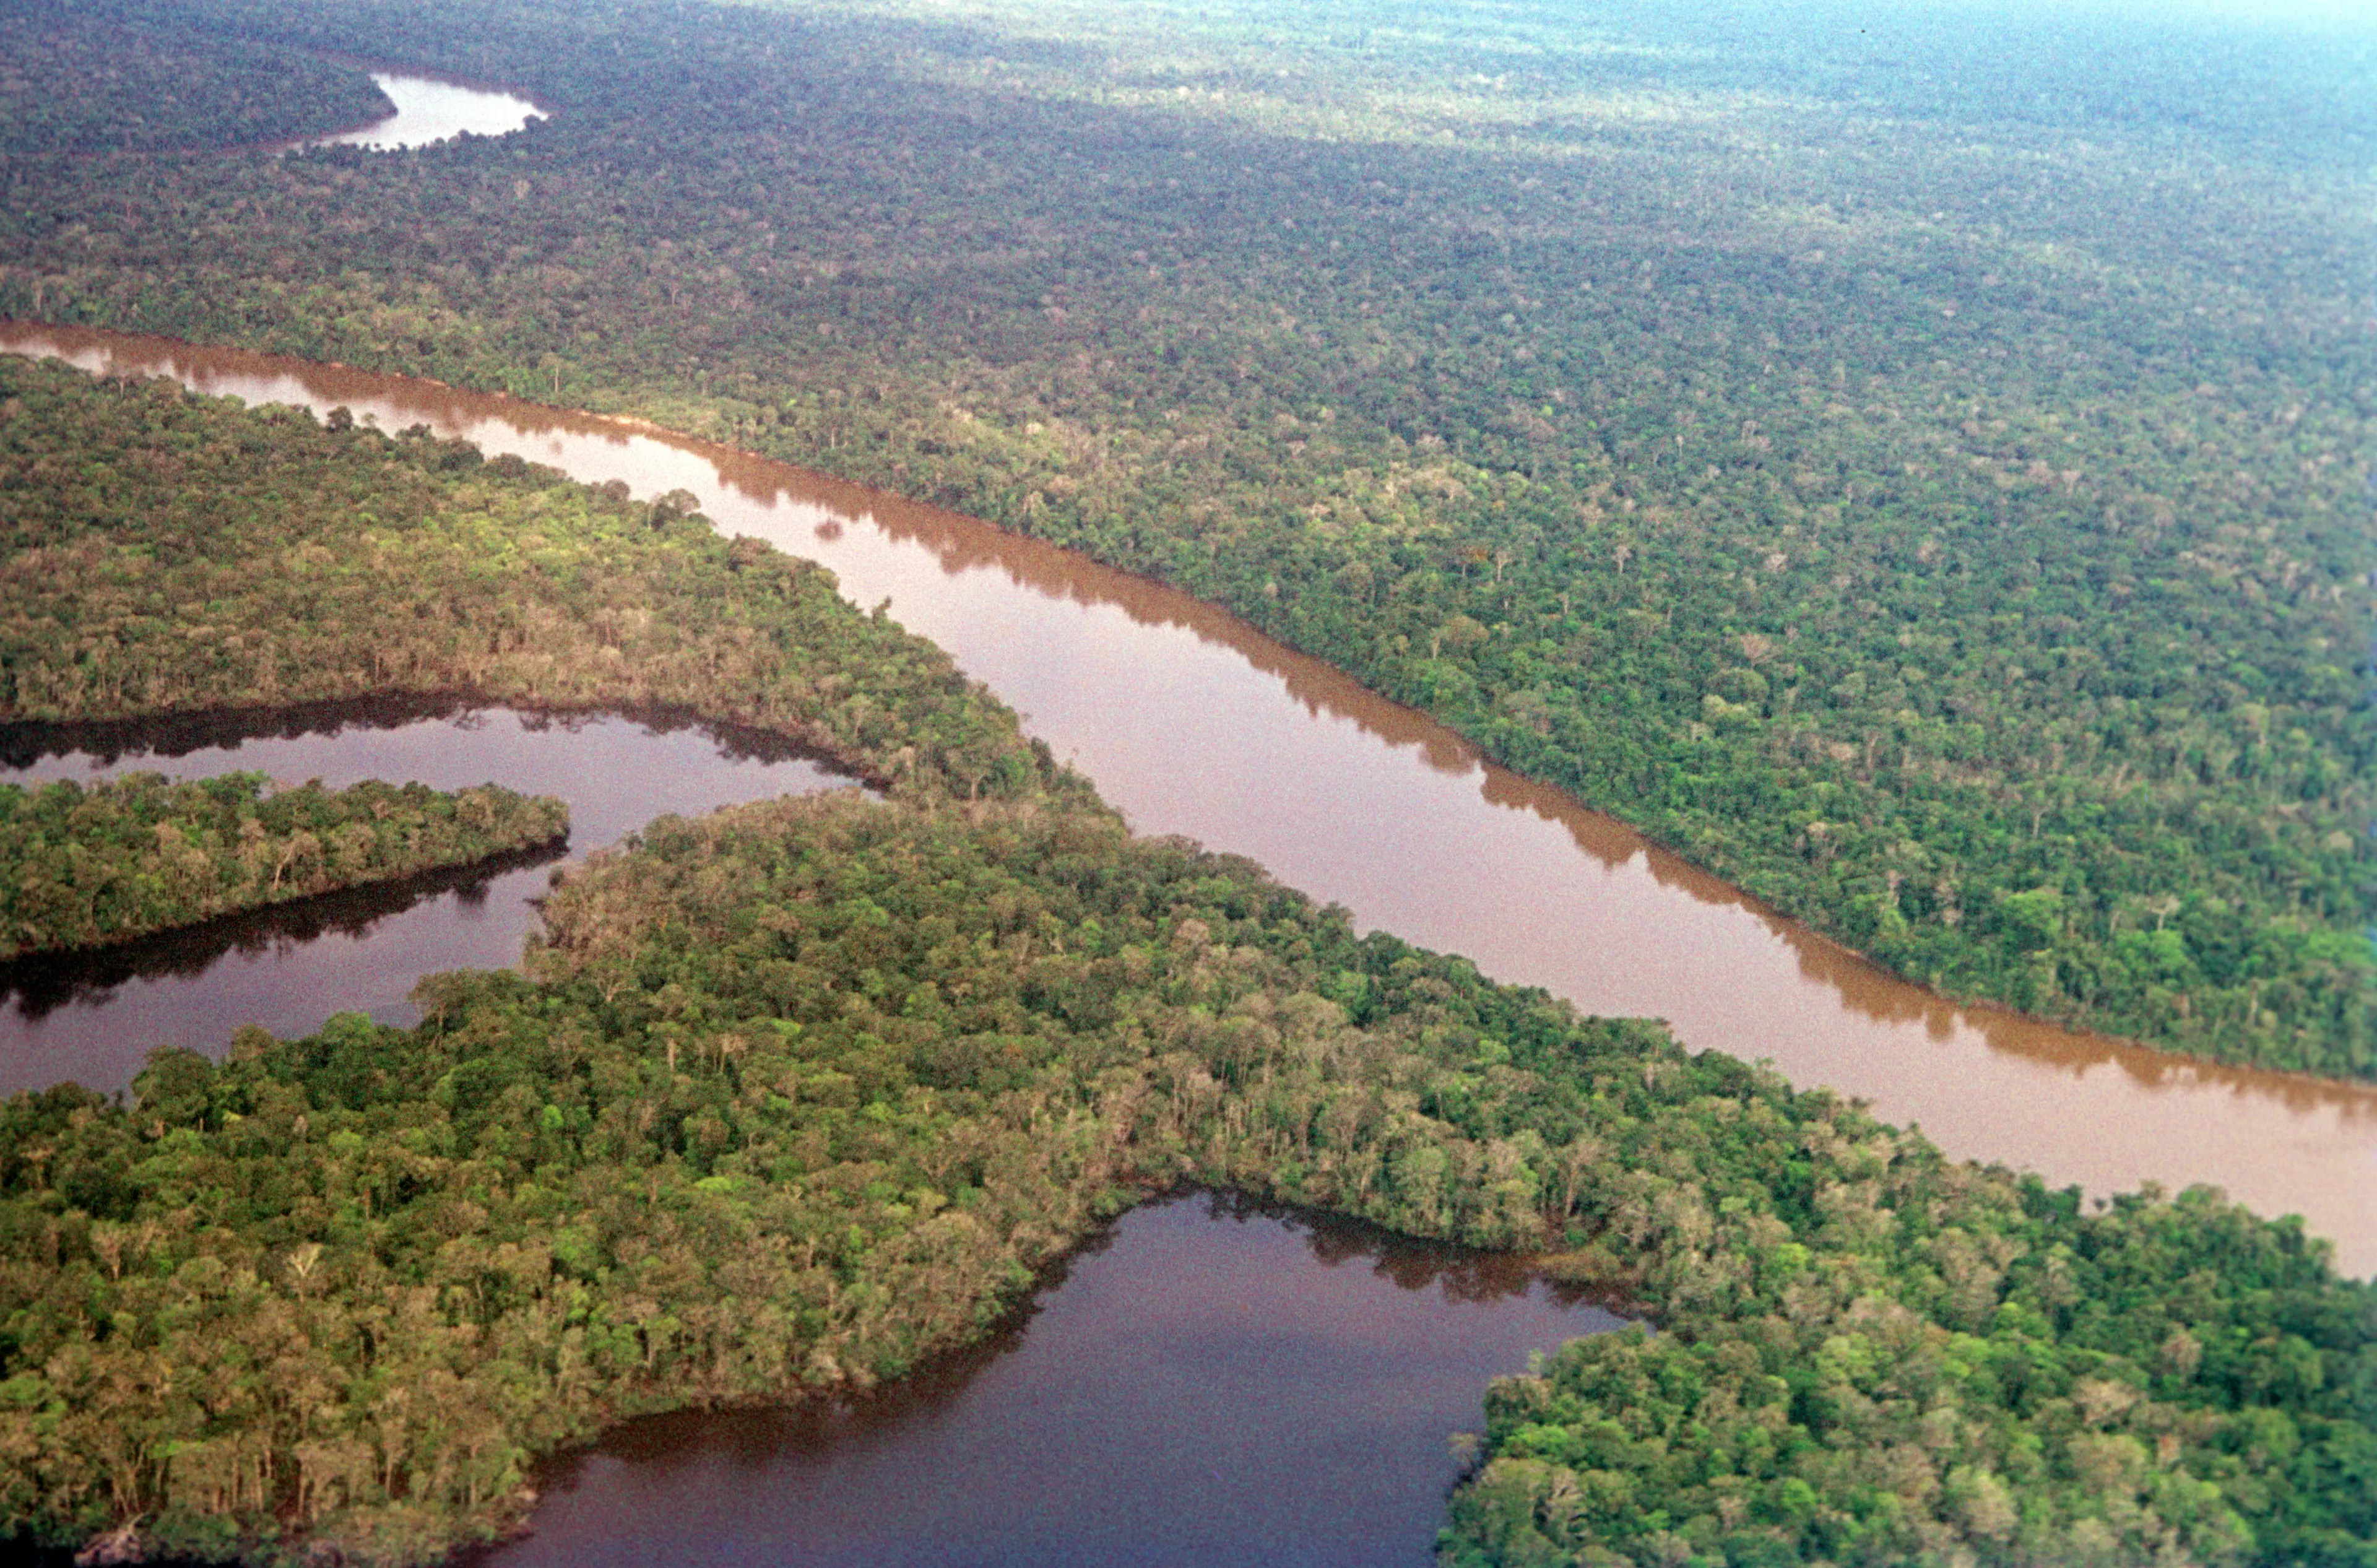 The Amazon River.